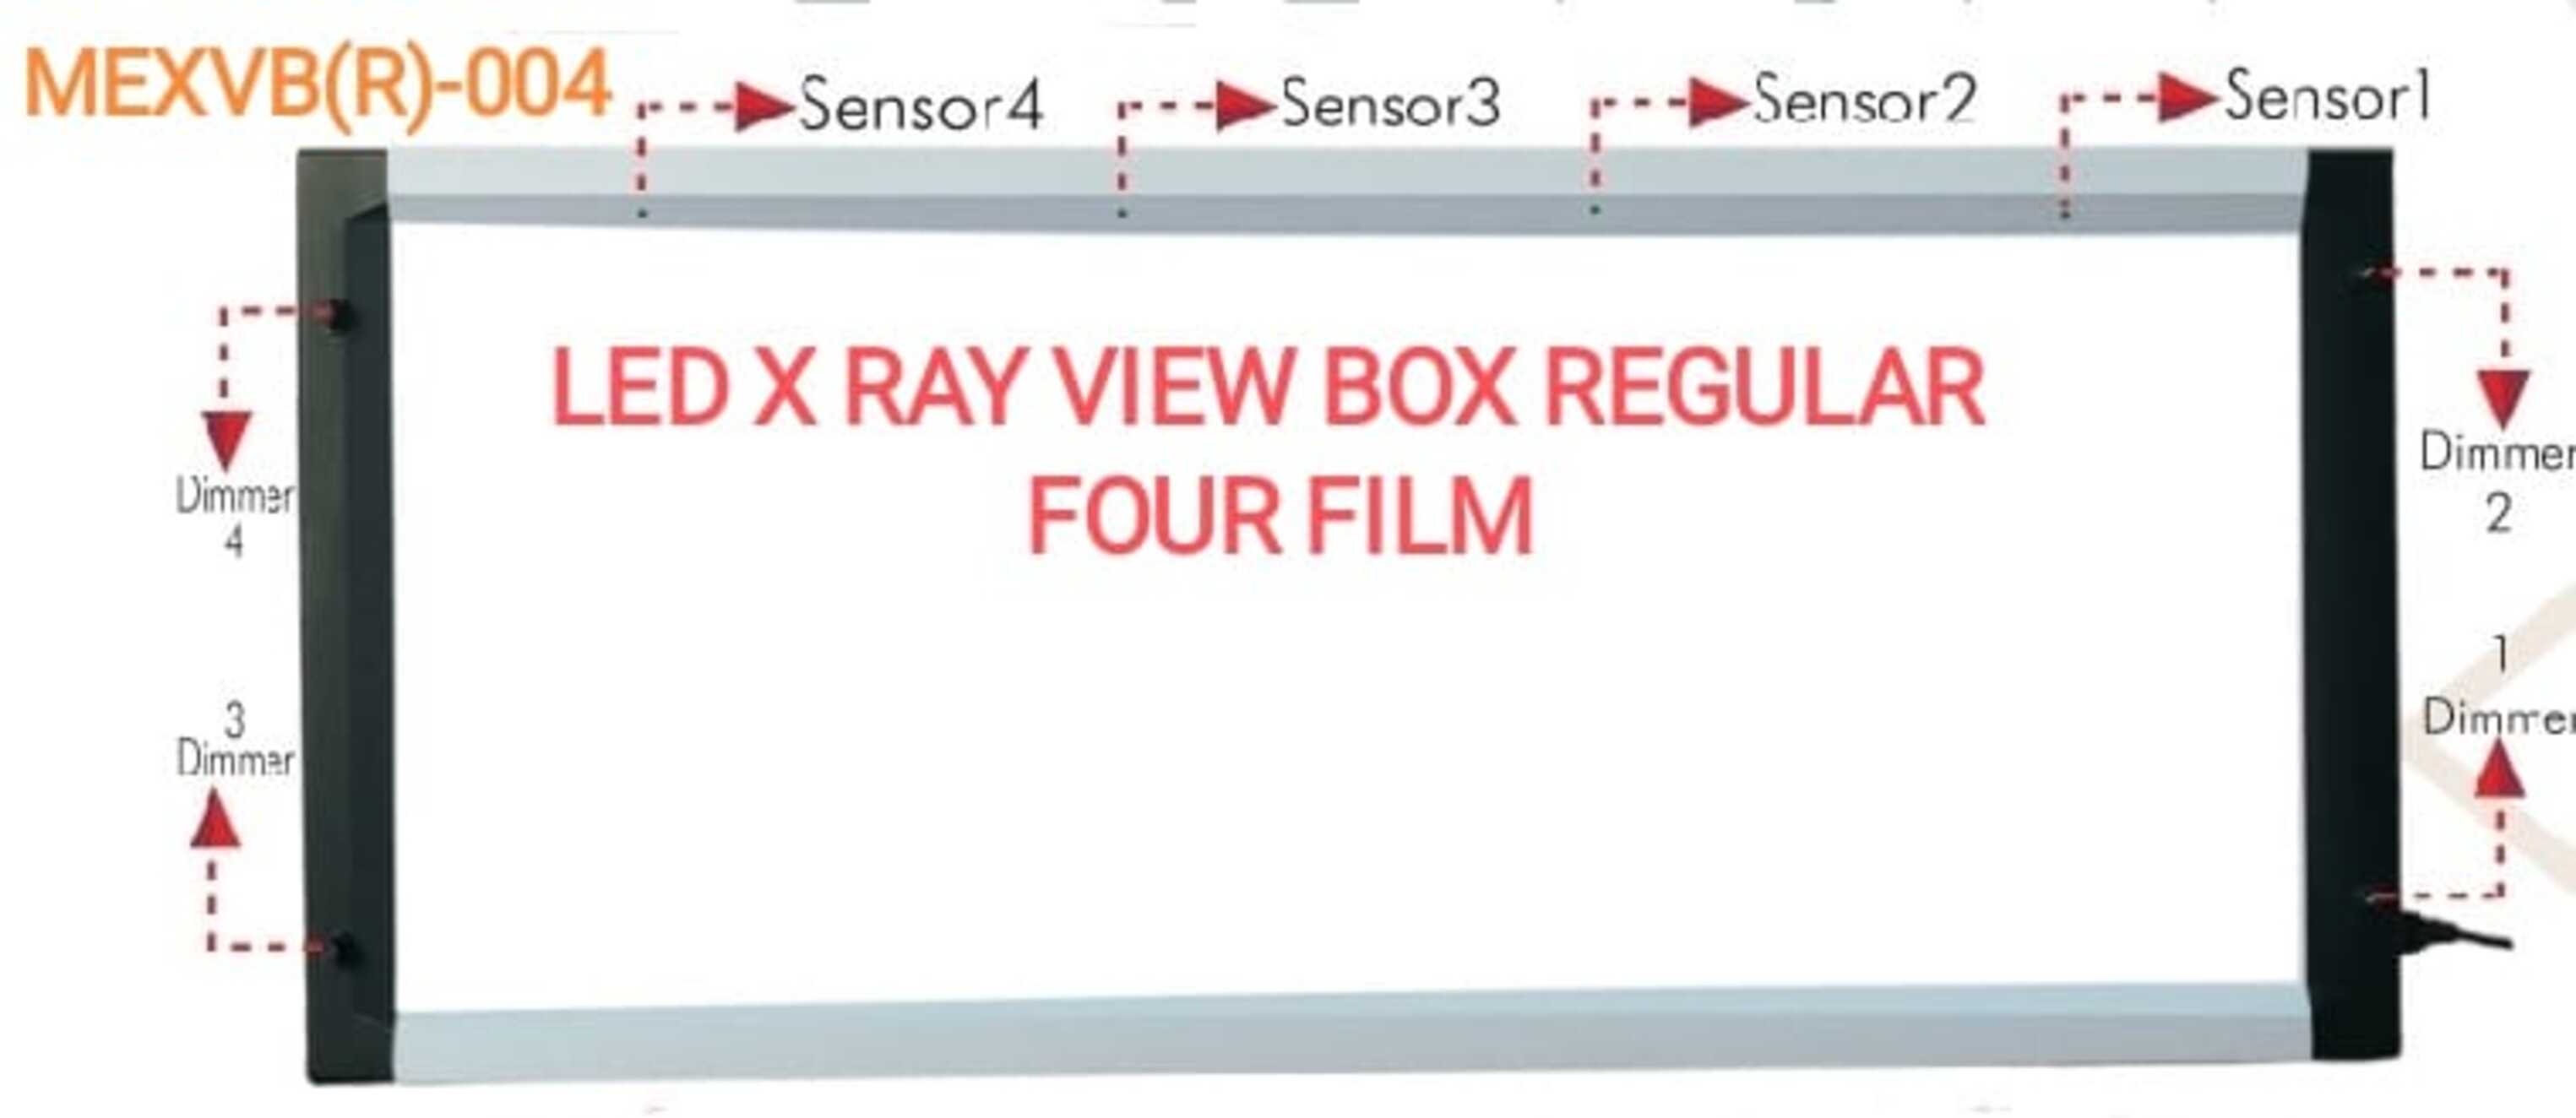 LED X RAY VIEW BOX REGULAR FOUR FILM